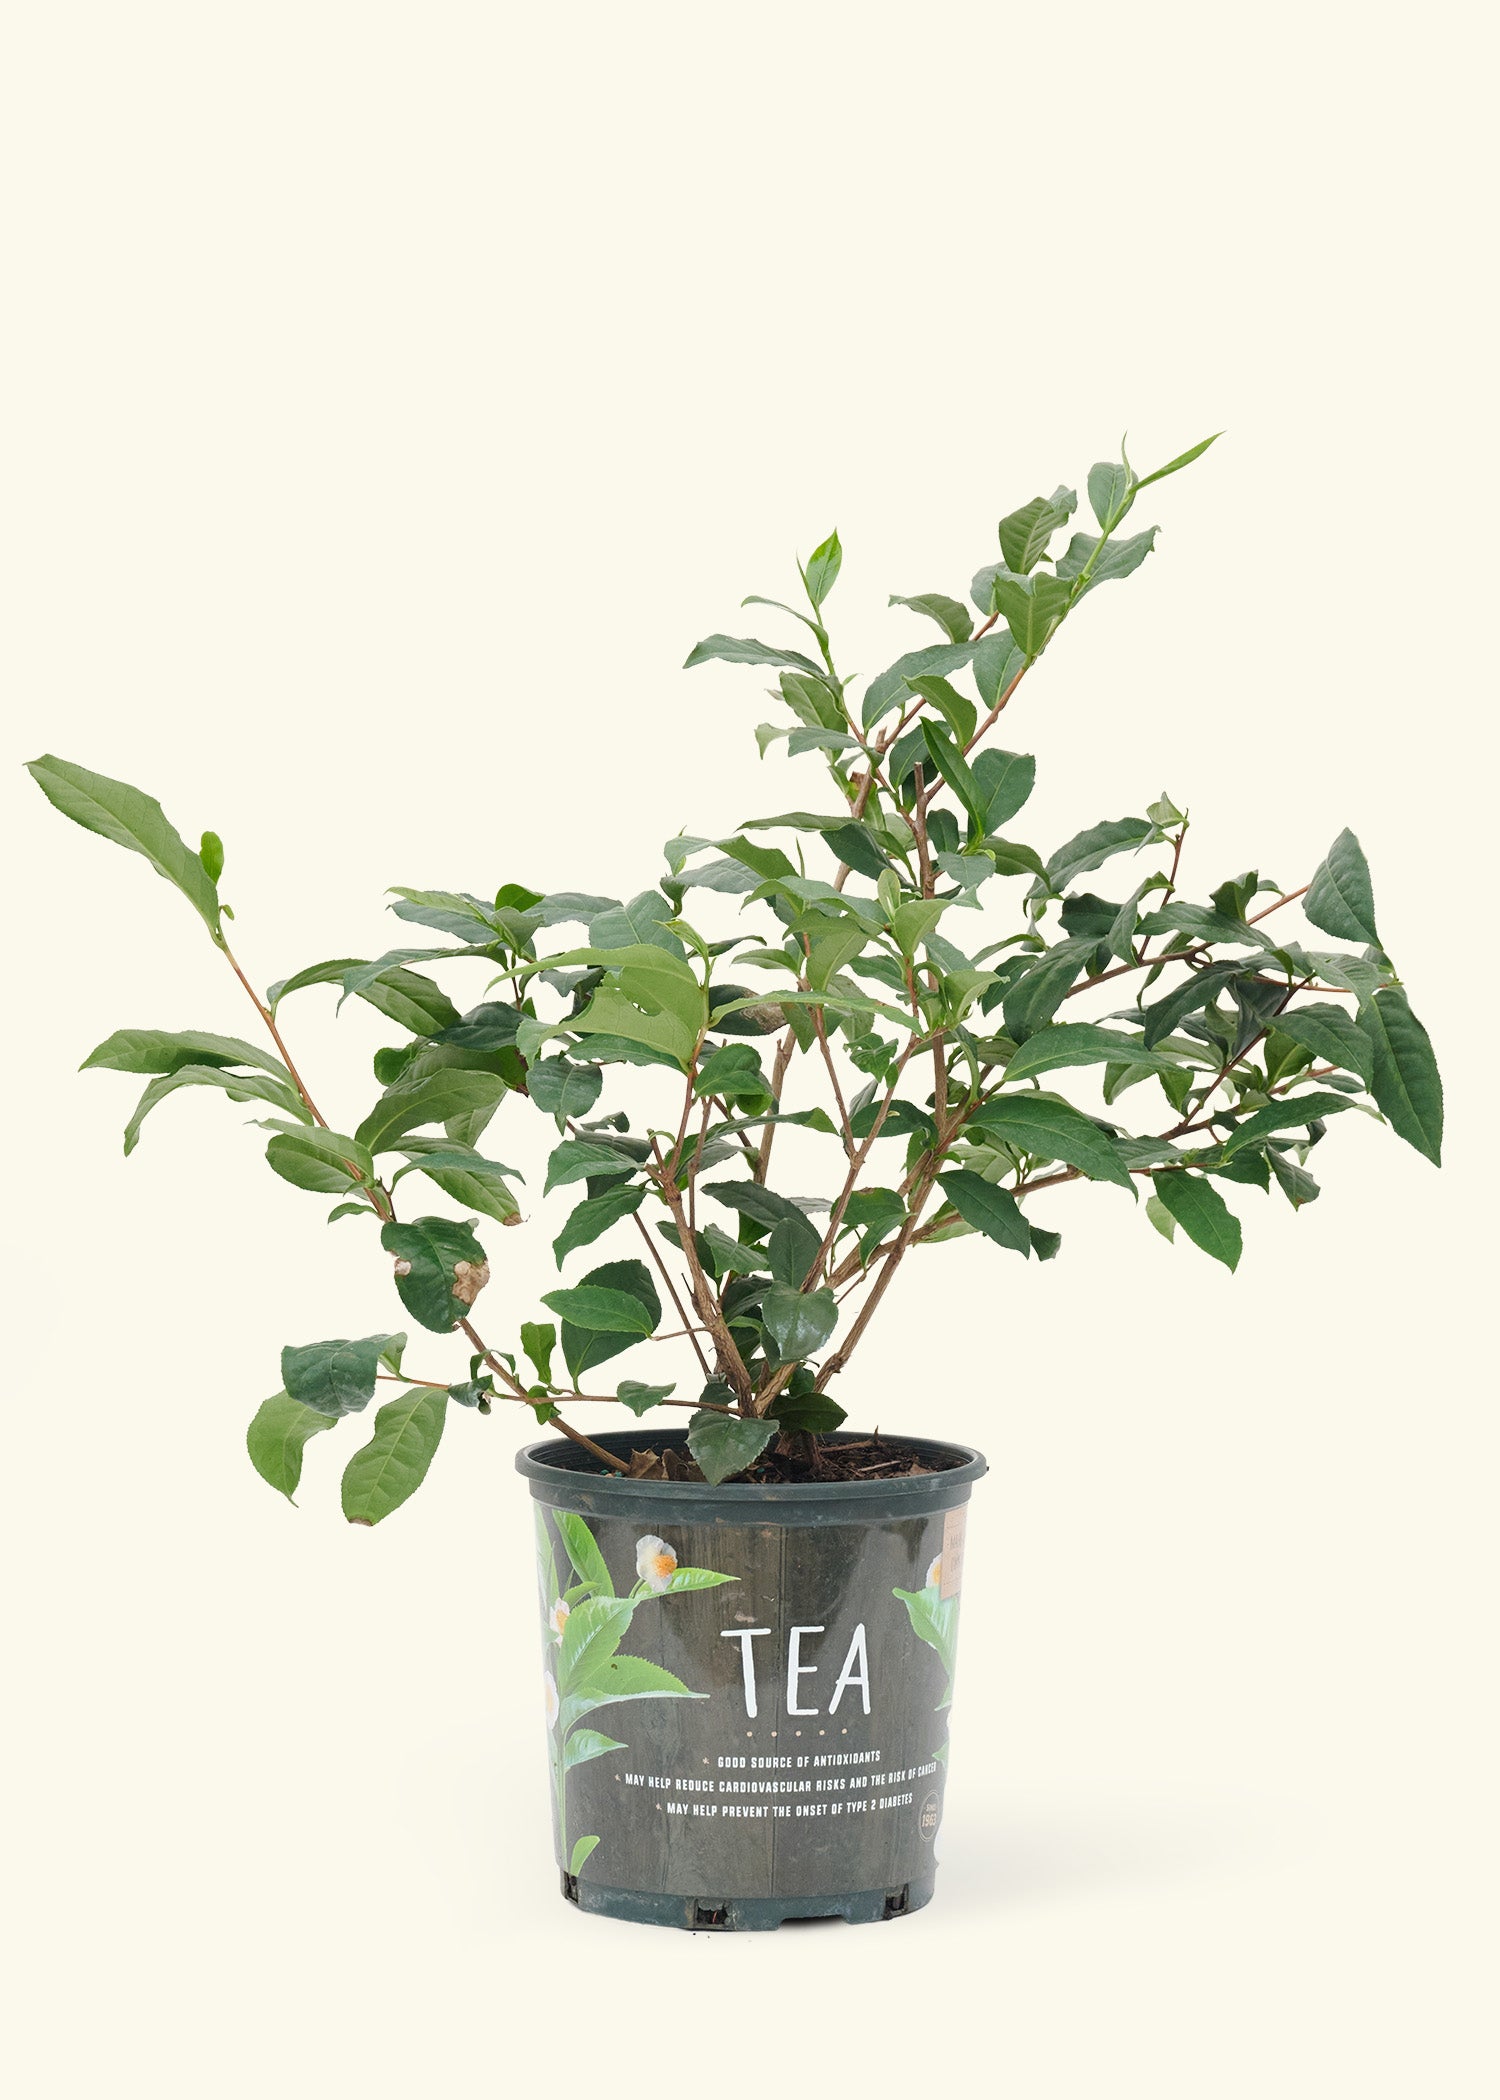 Tea Plant (Camellia sinensis) in a grow pot.